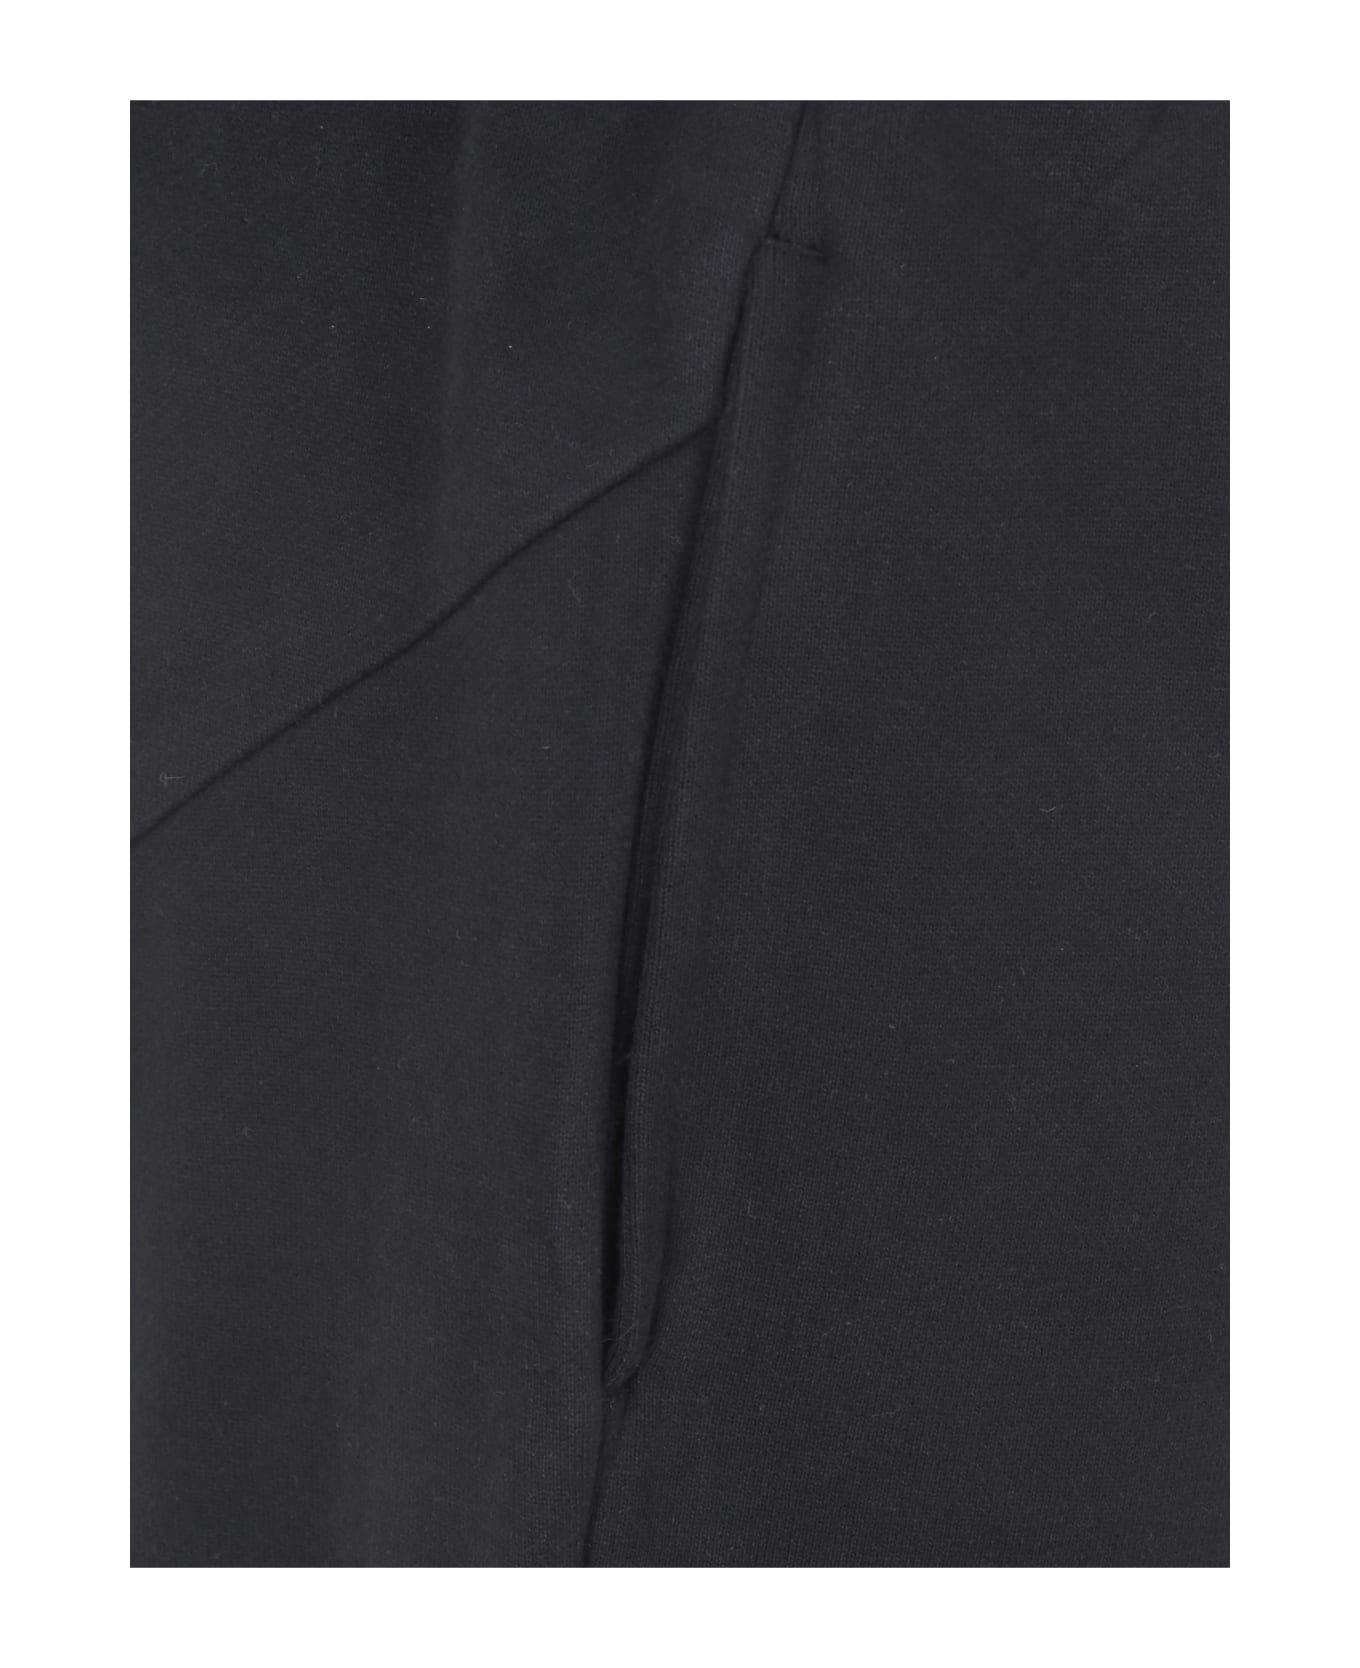 Balenciaga Sweatpants - Washed blk/wshd blk